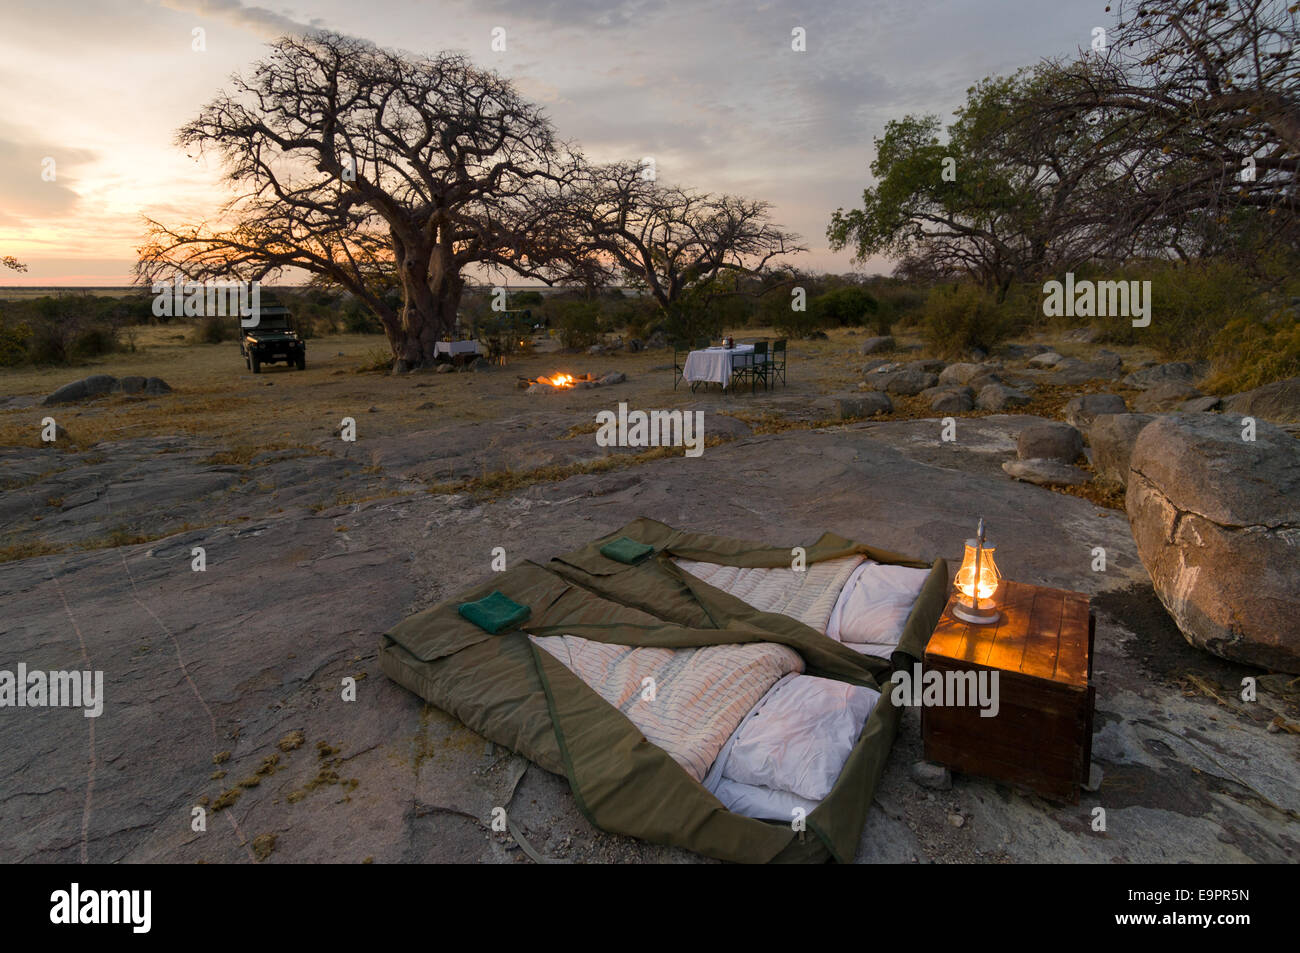 Camping beds of a luxury private safari camp on the granite mass of Kubu Island (Lekhubu) at sunset, Magkadigkadi Pan, Botswana Stock Photo